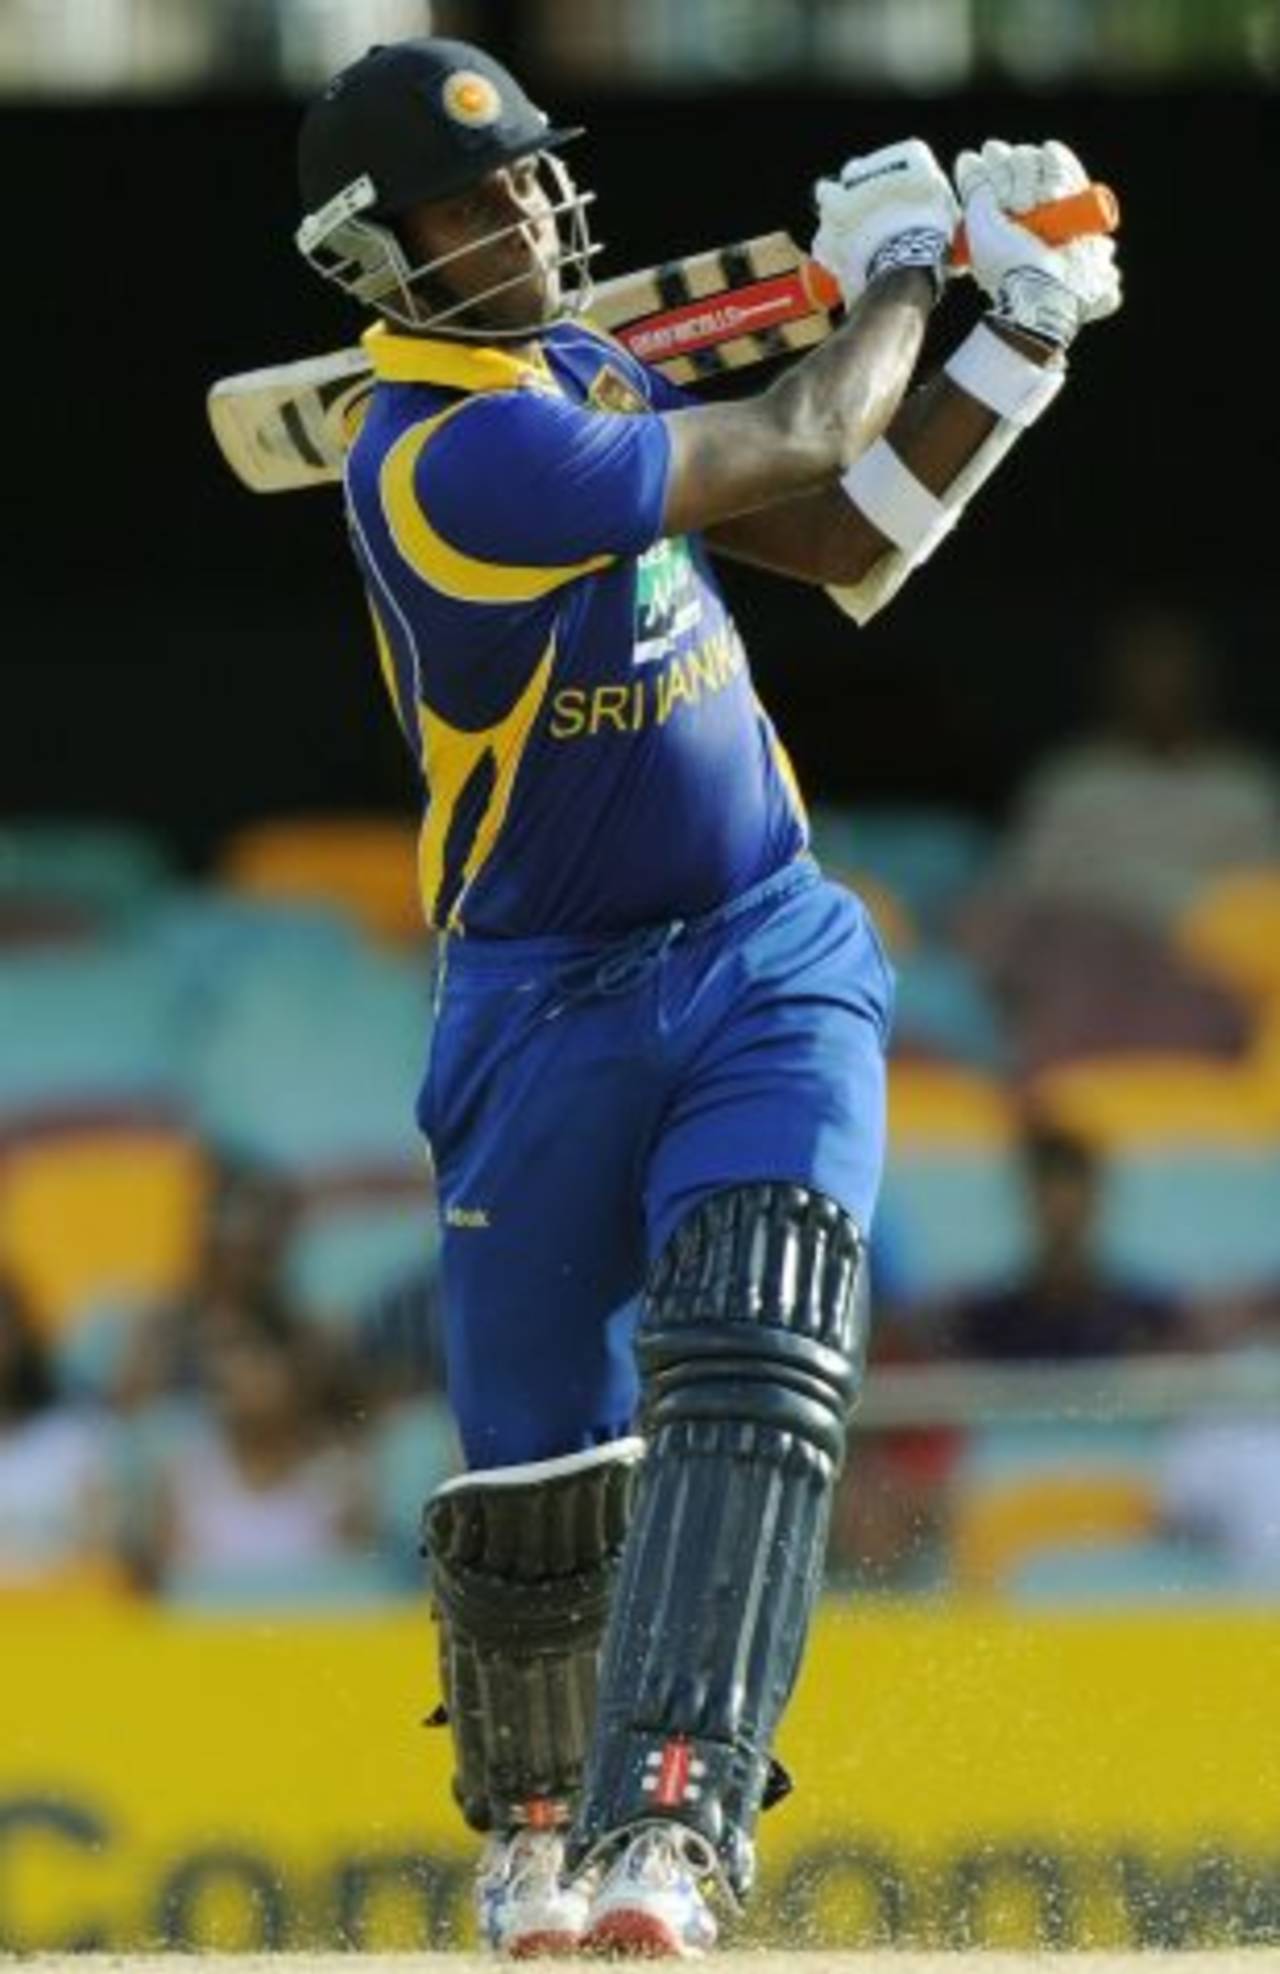 Angelo Mathews aims for the midwicket boundary, India v Sri Lanka, CB Series, Brisbane, February 21, 2012